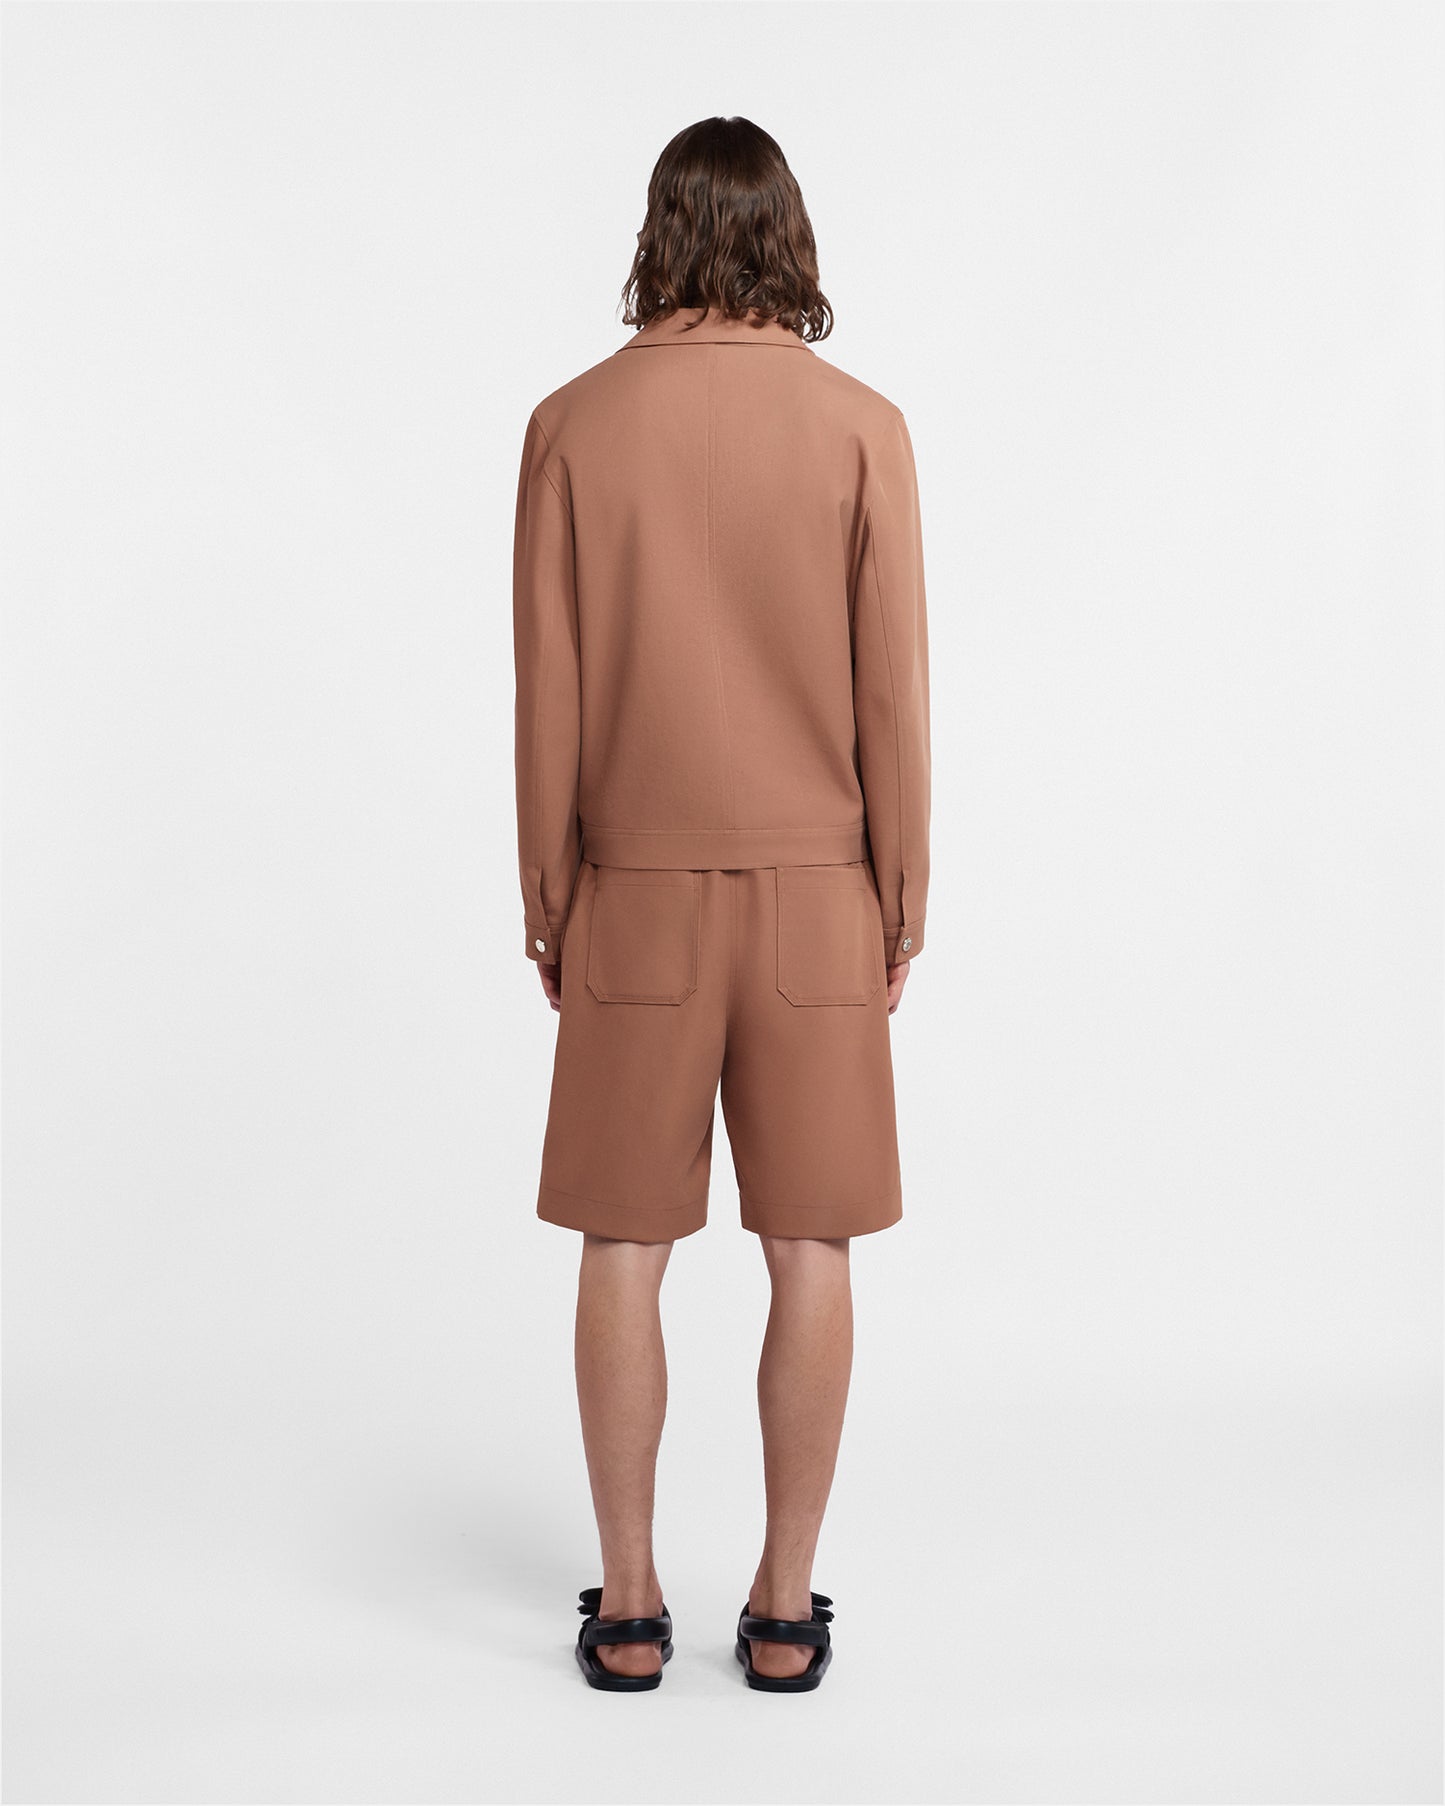 Callen - Structured Twill Shorts - Rust Twill